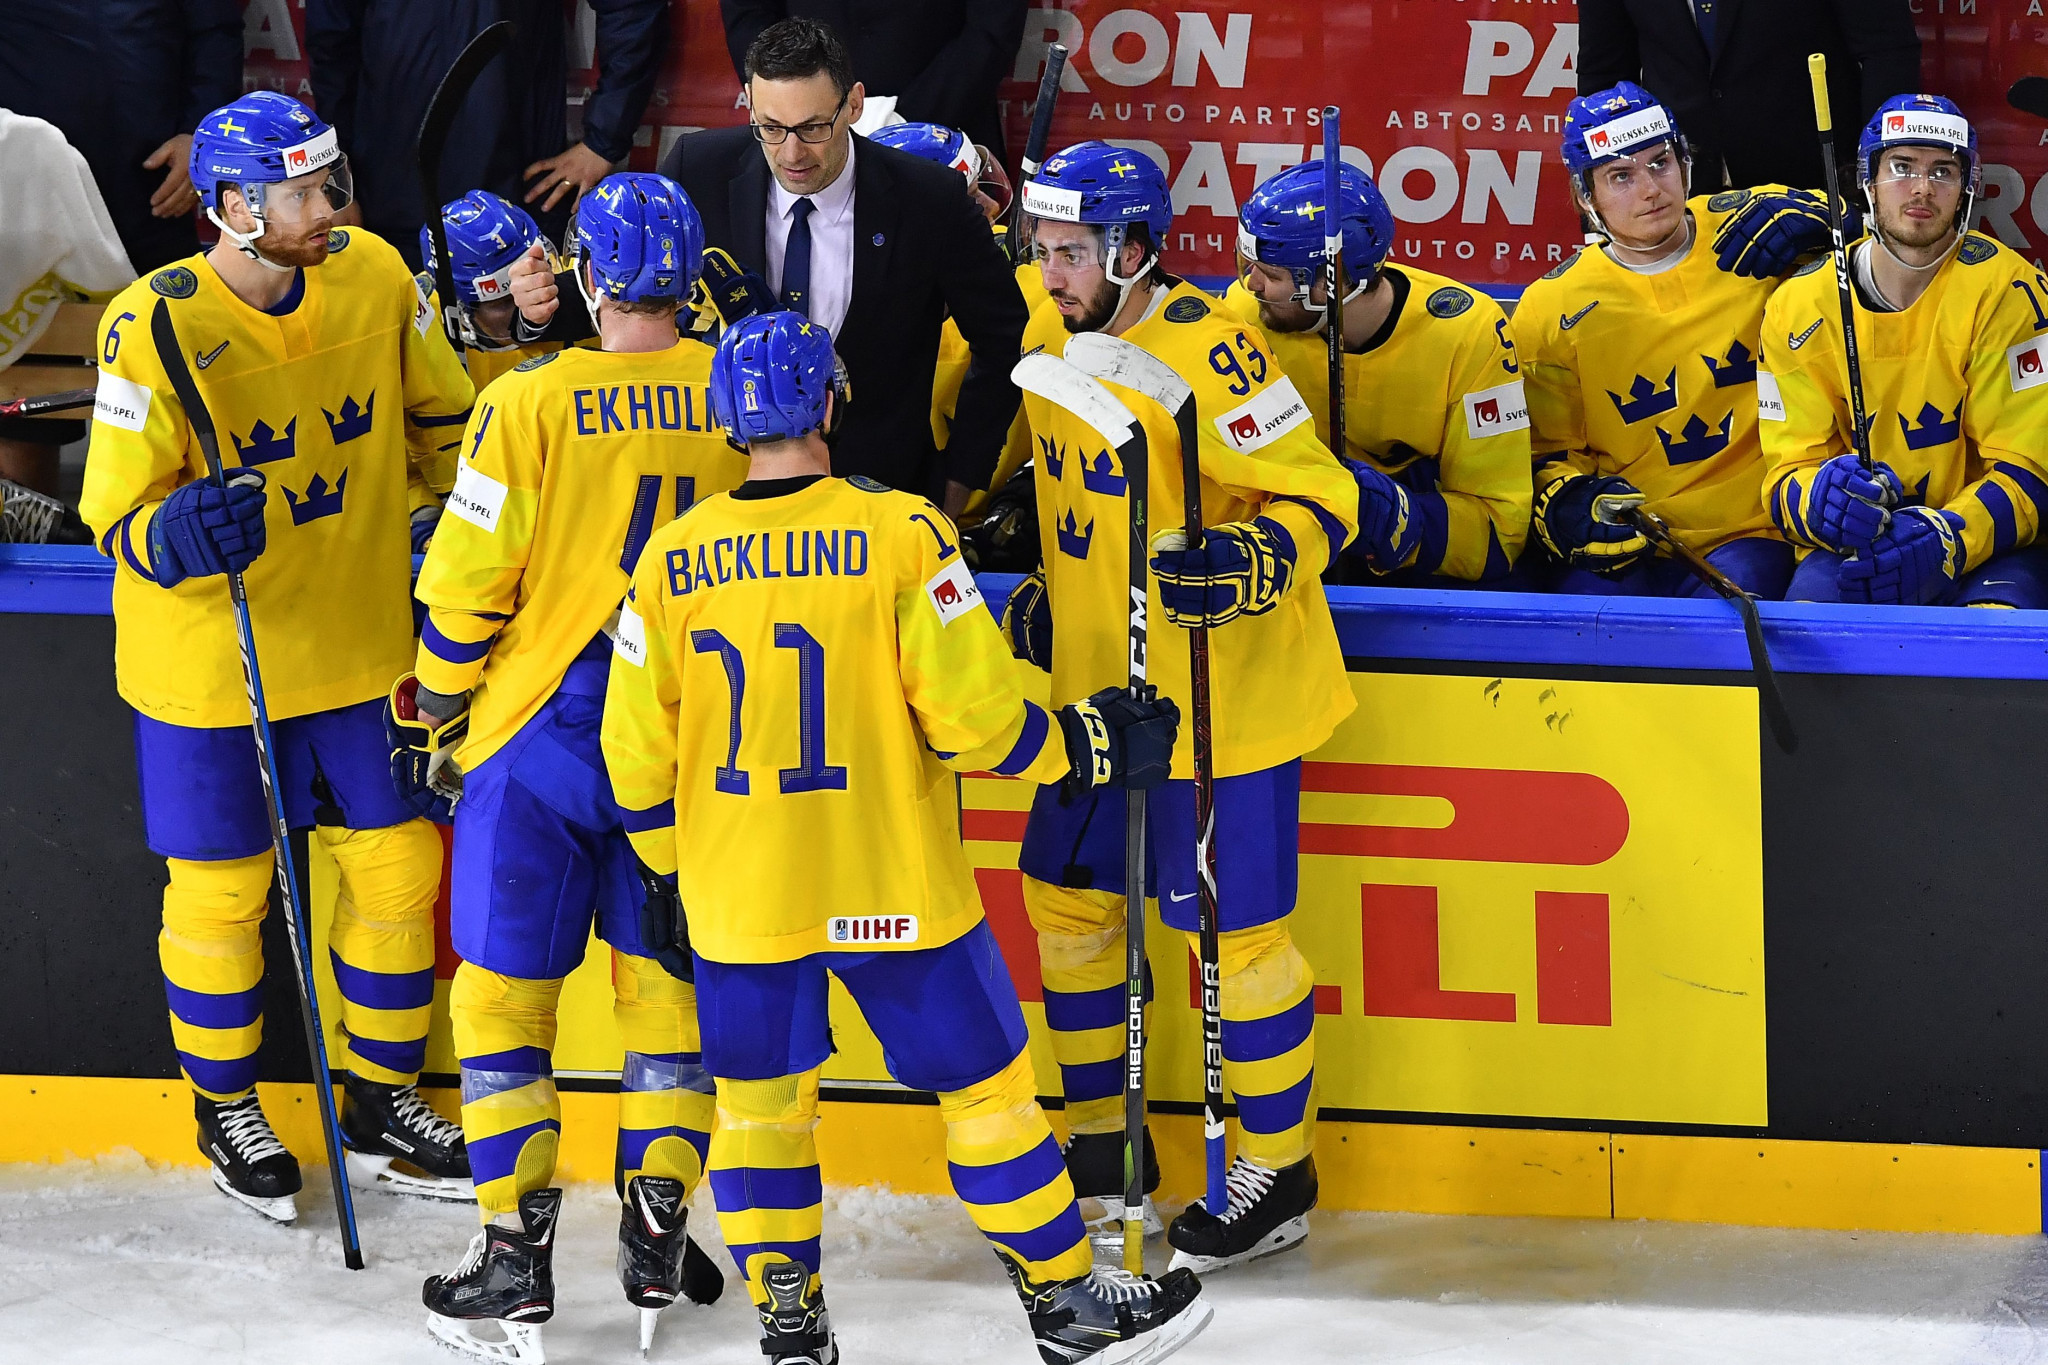 Grönborg to depart as Swedish ice hockey coach after 2019 World Championship